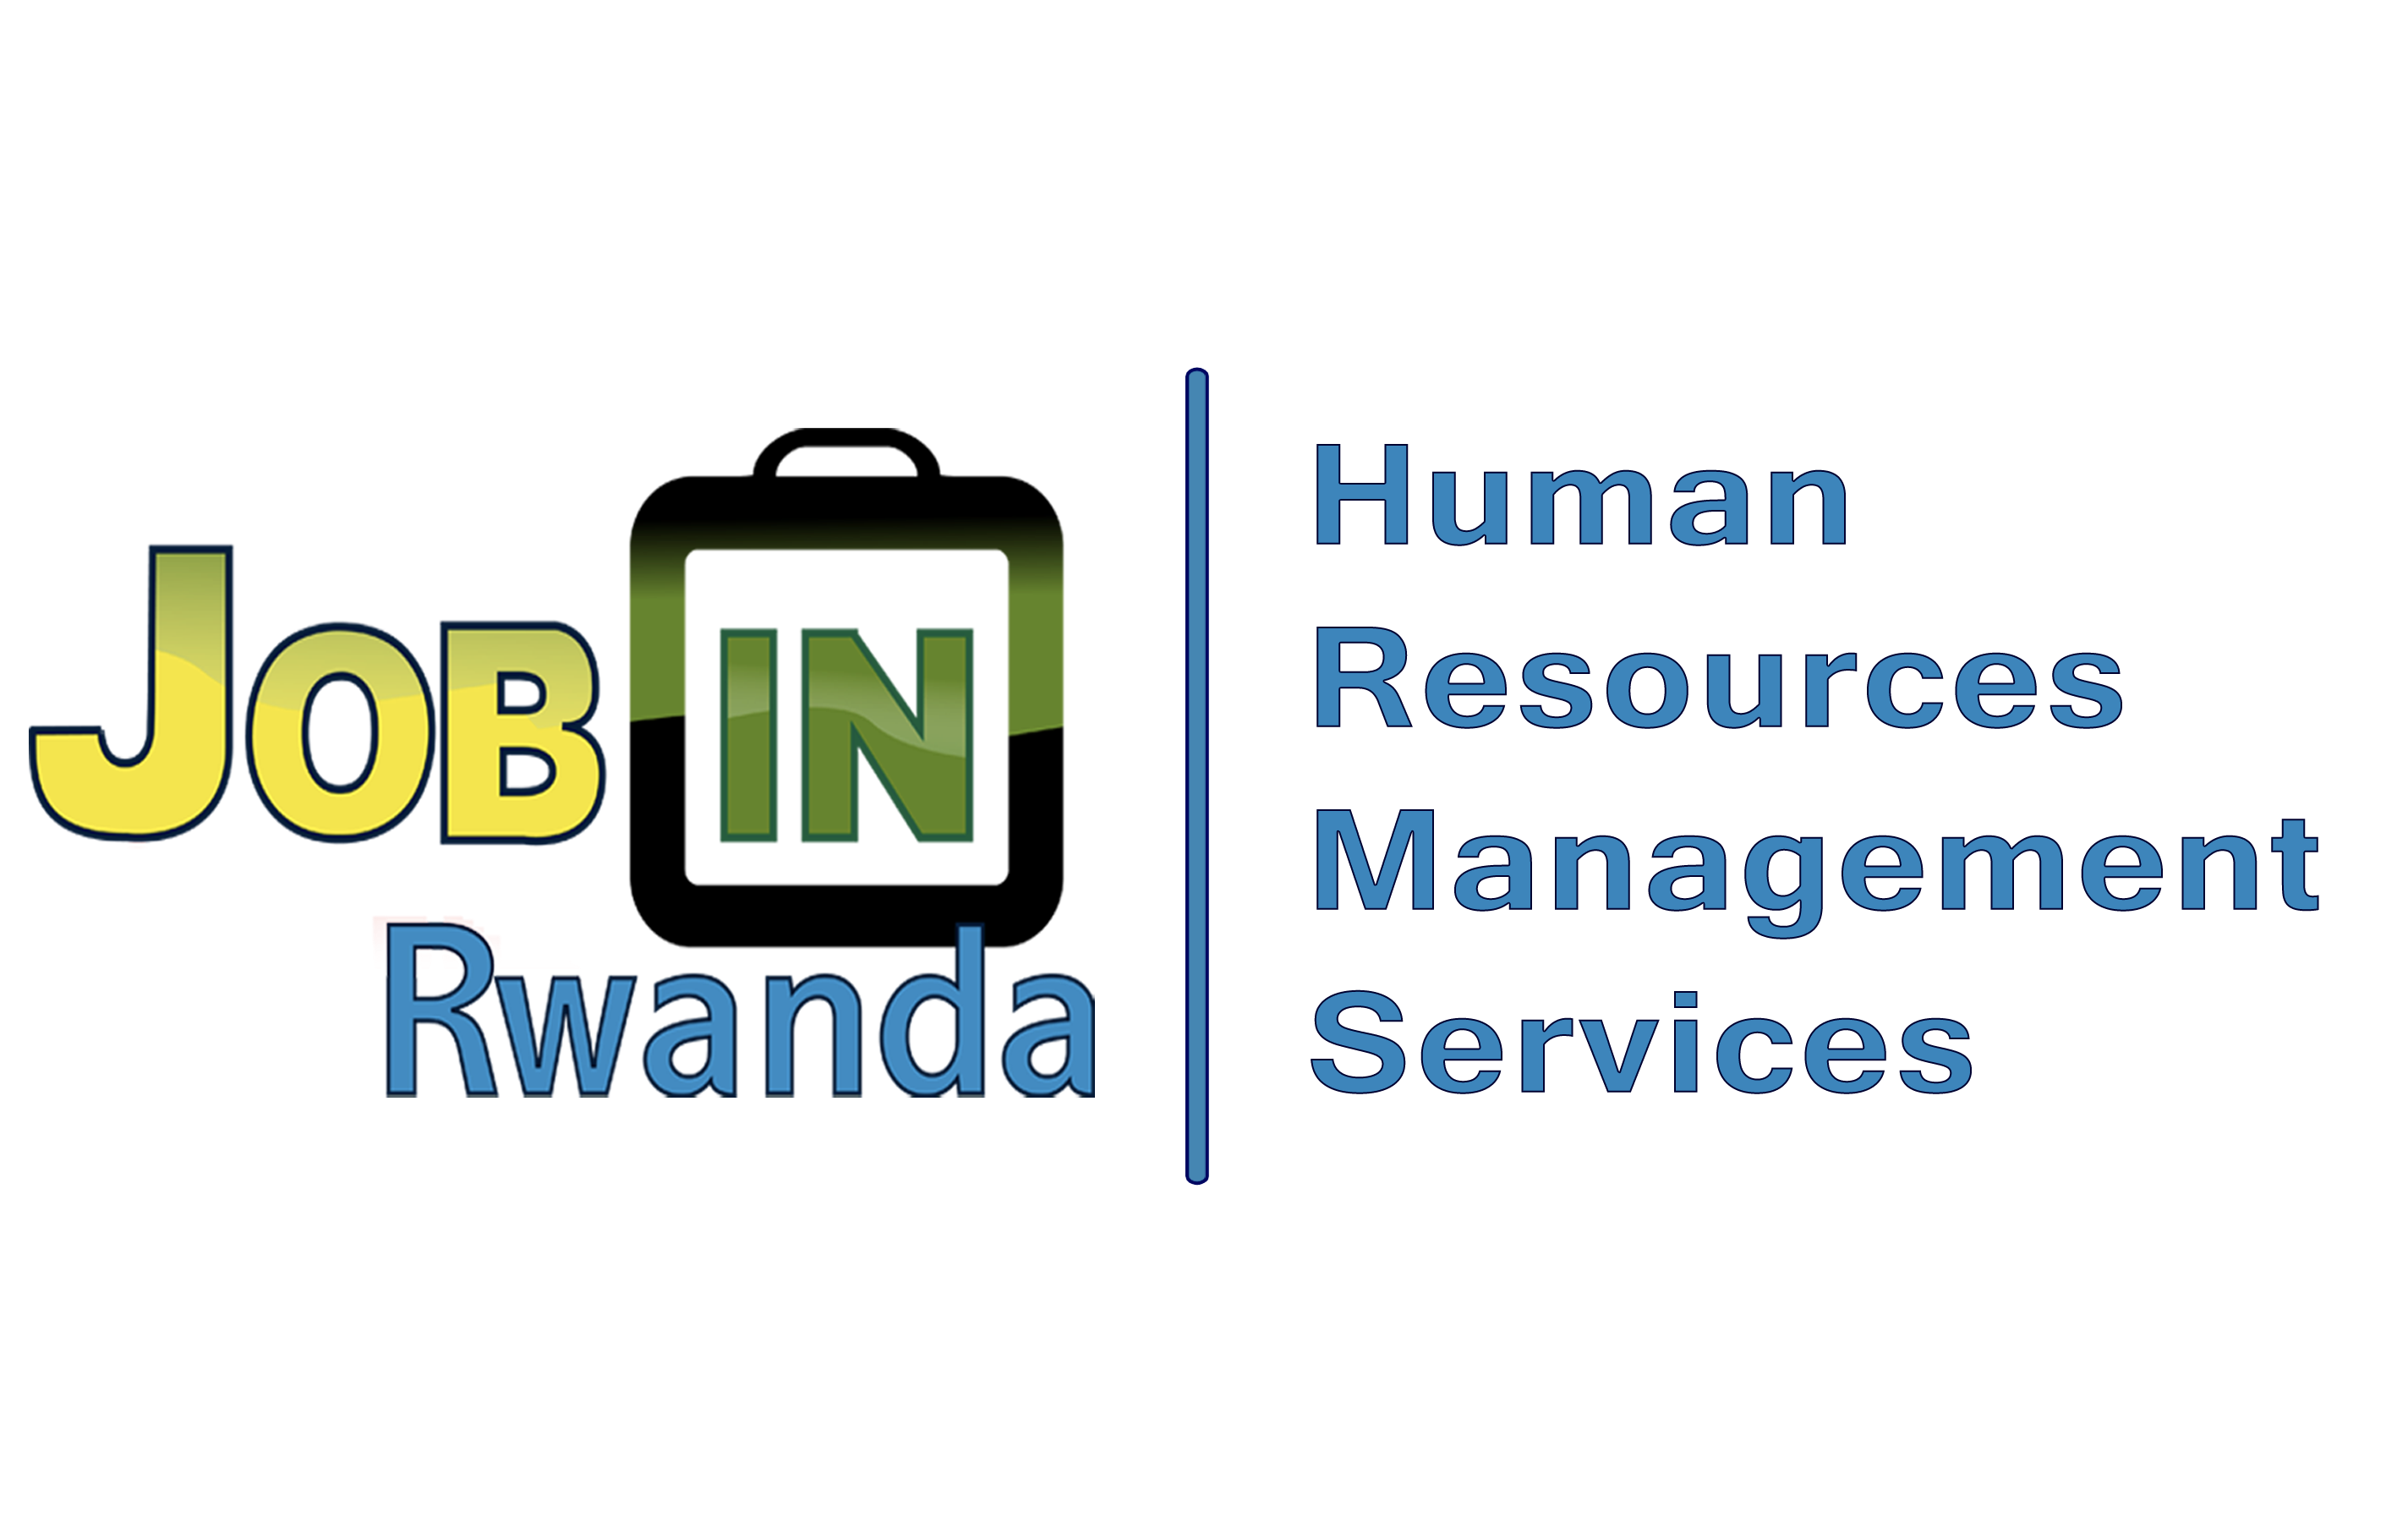 Job in Rwanda hrms